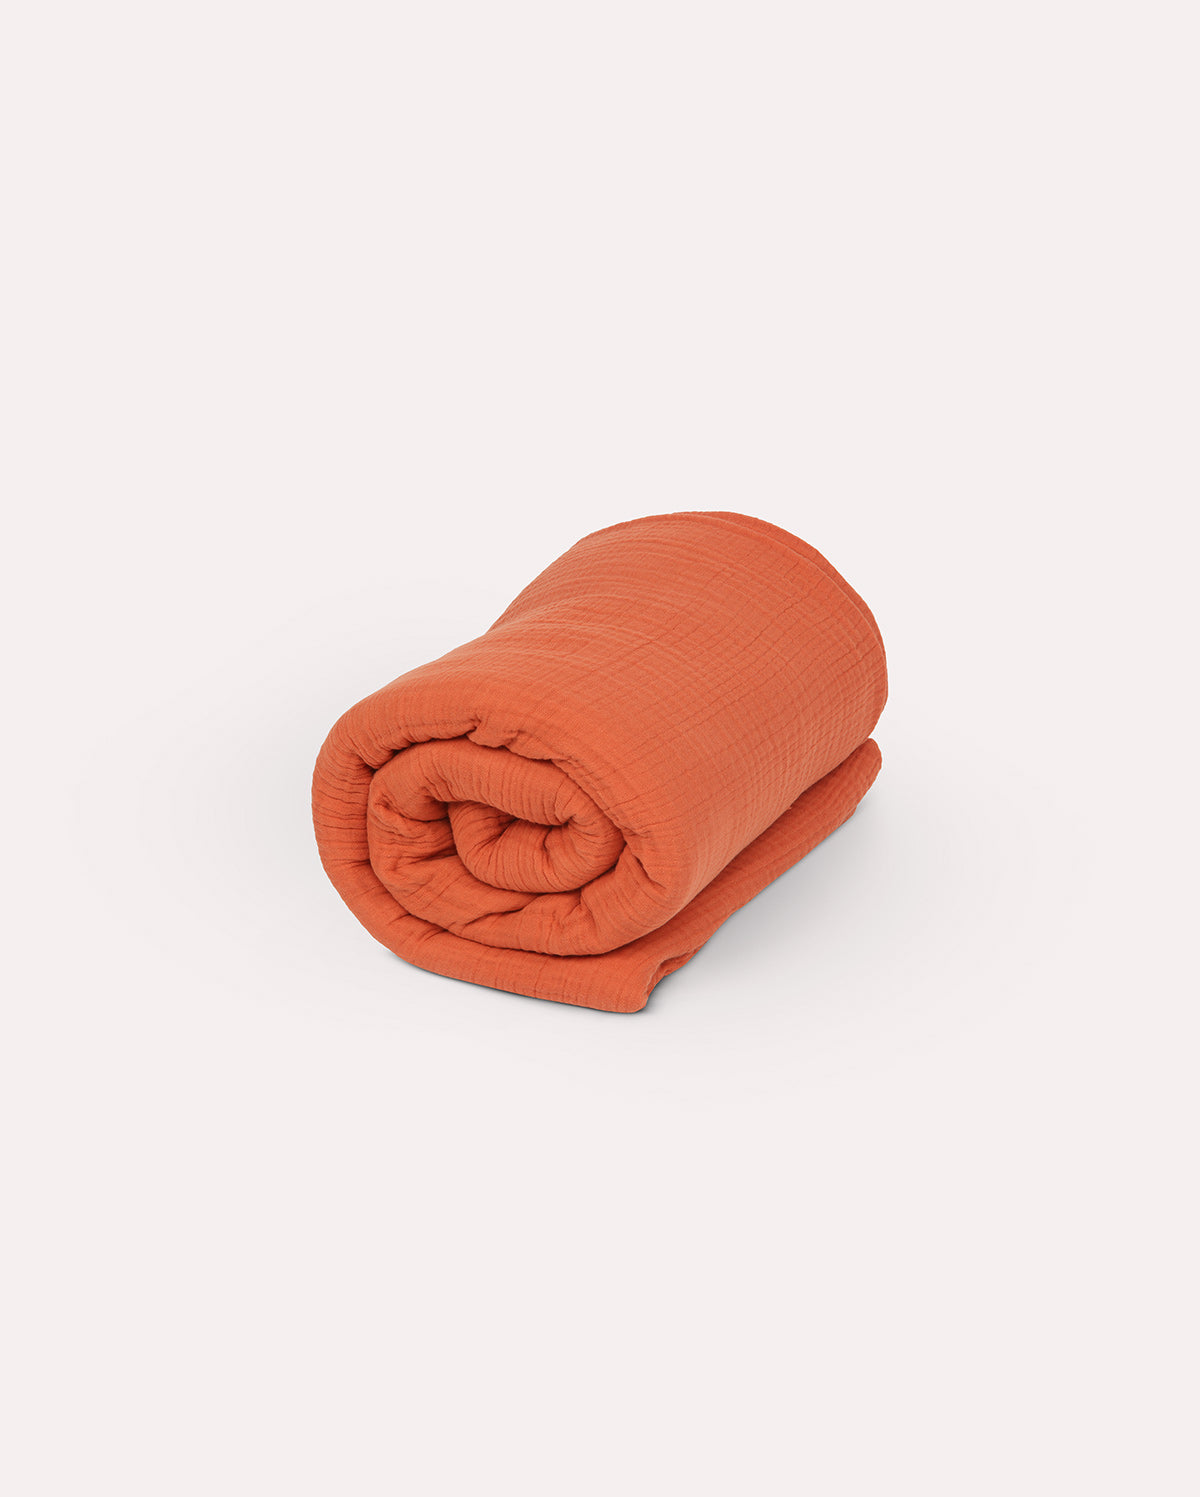 Mollis Muslin Cotton Blanket - Terracotta